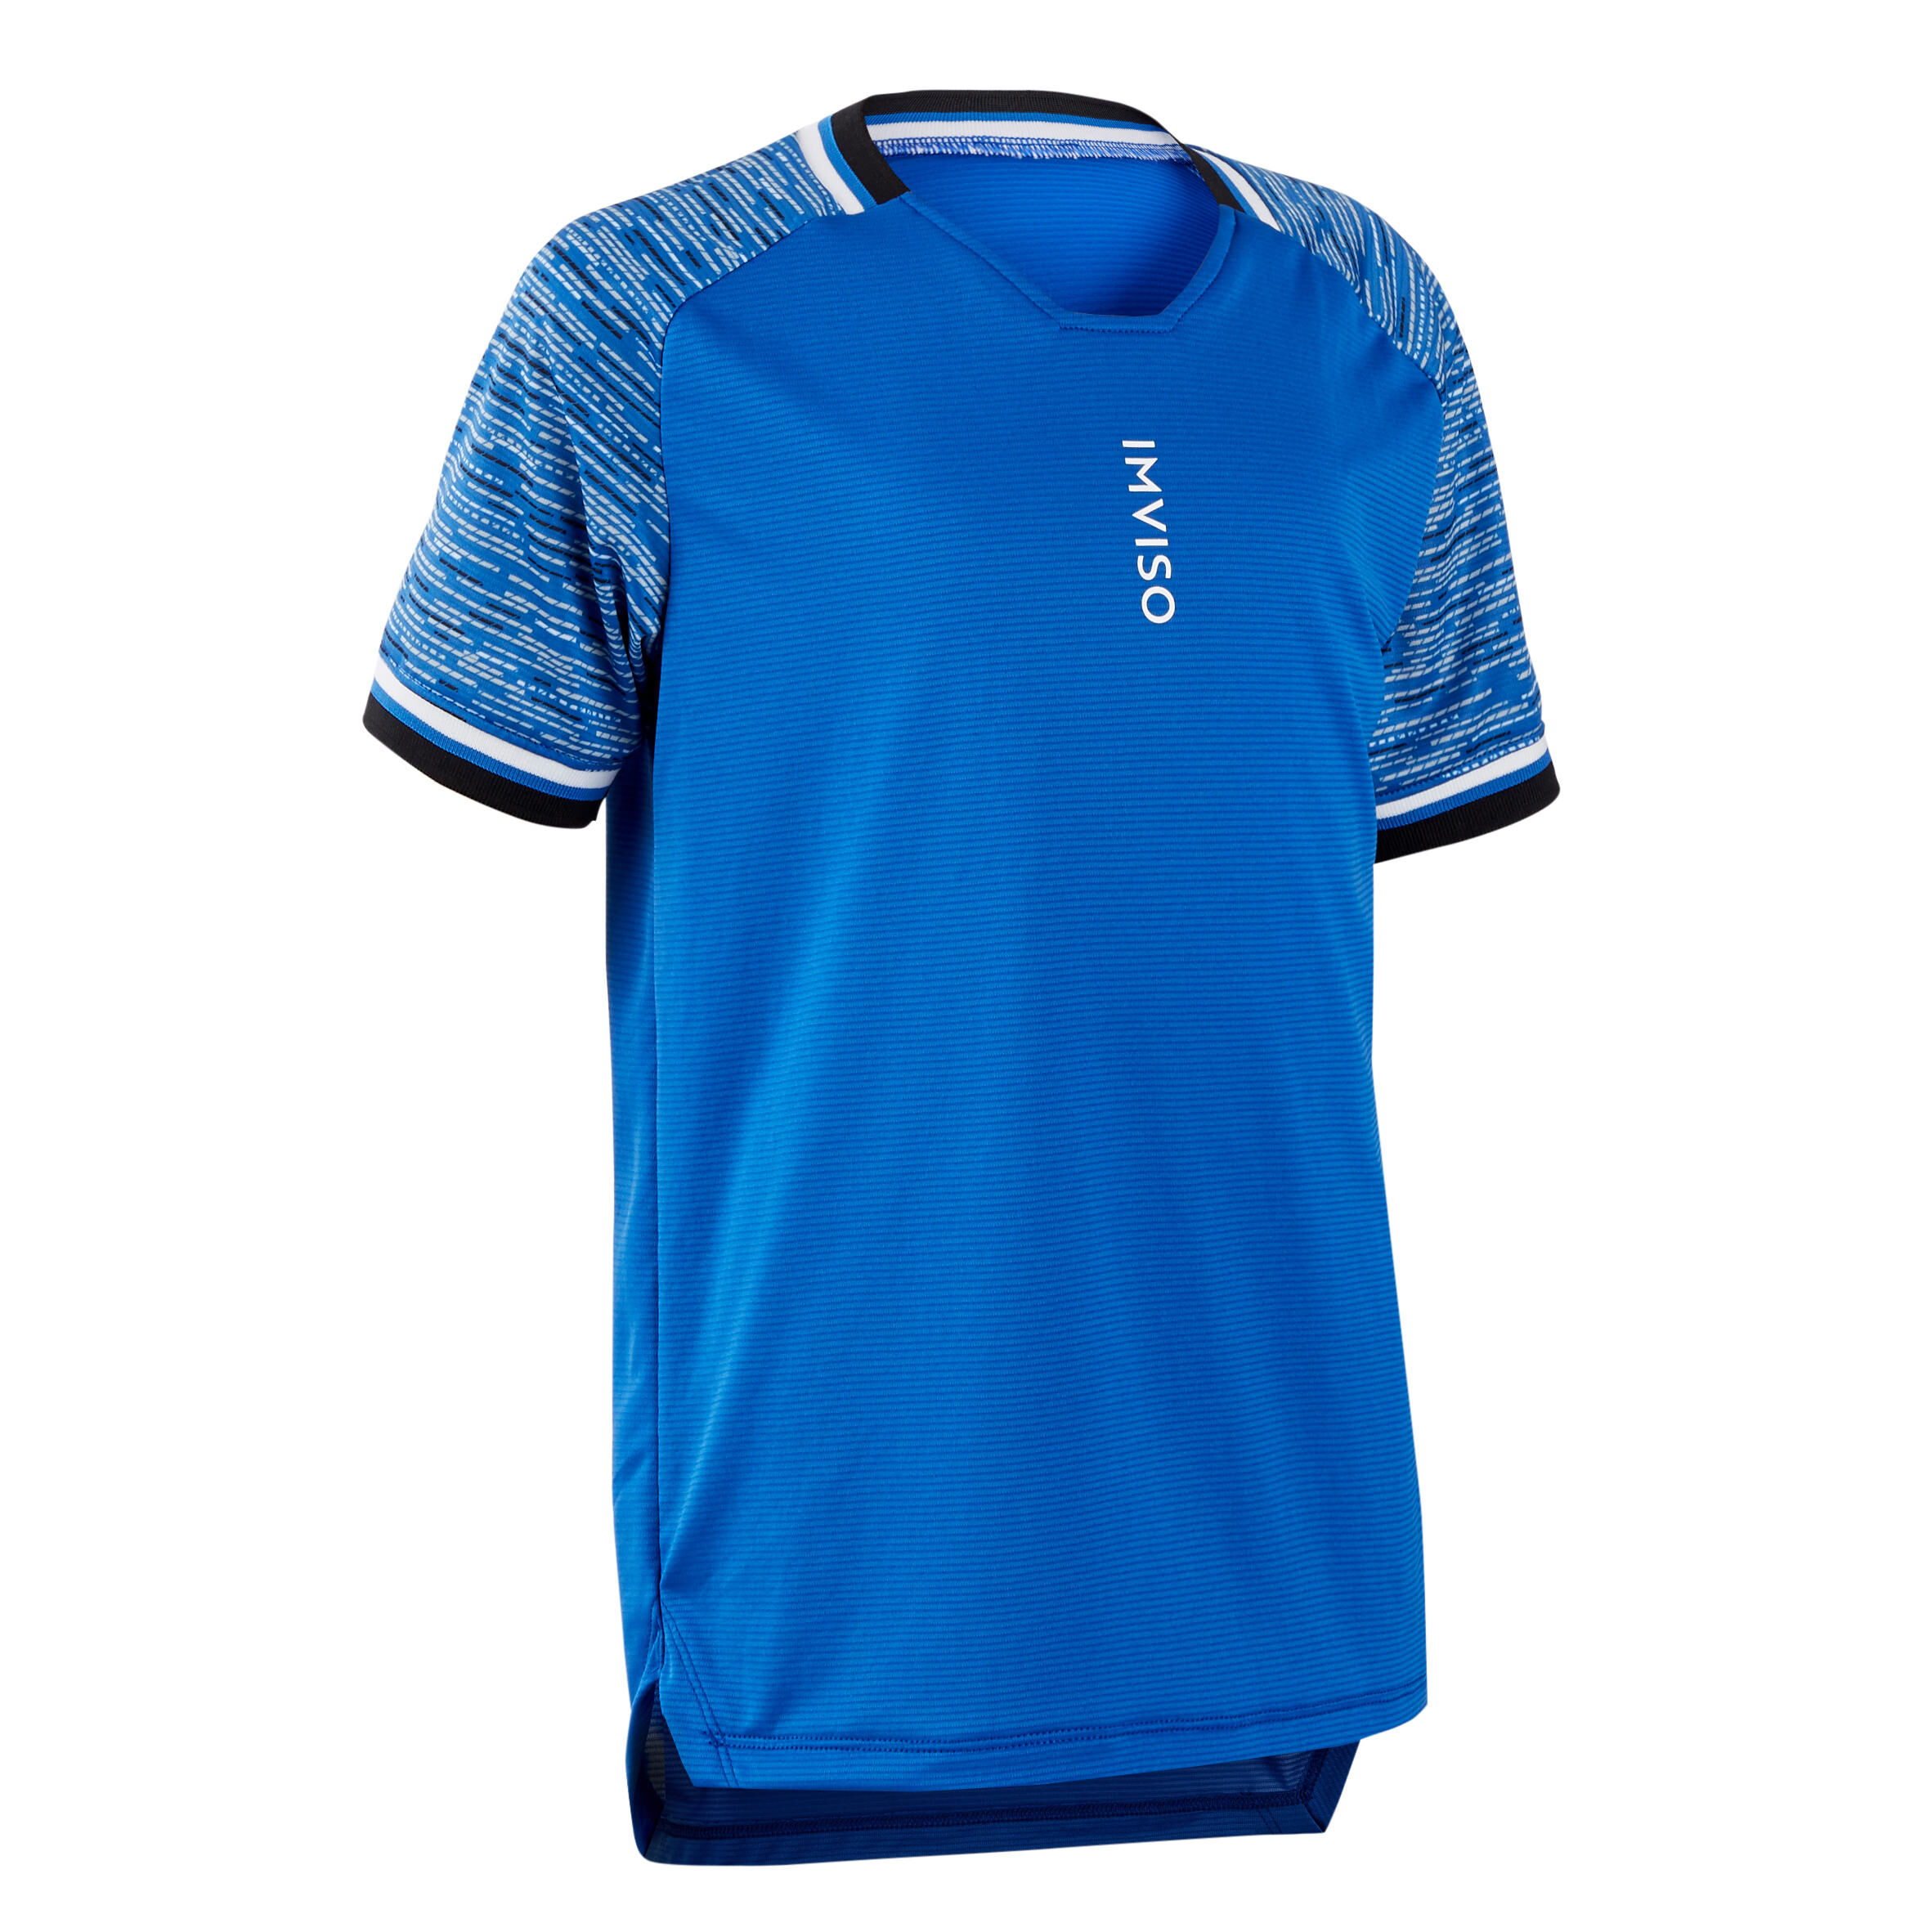 IMVISO Kids' Futsal Shirt - Blue